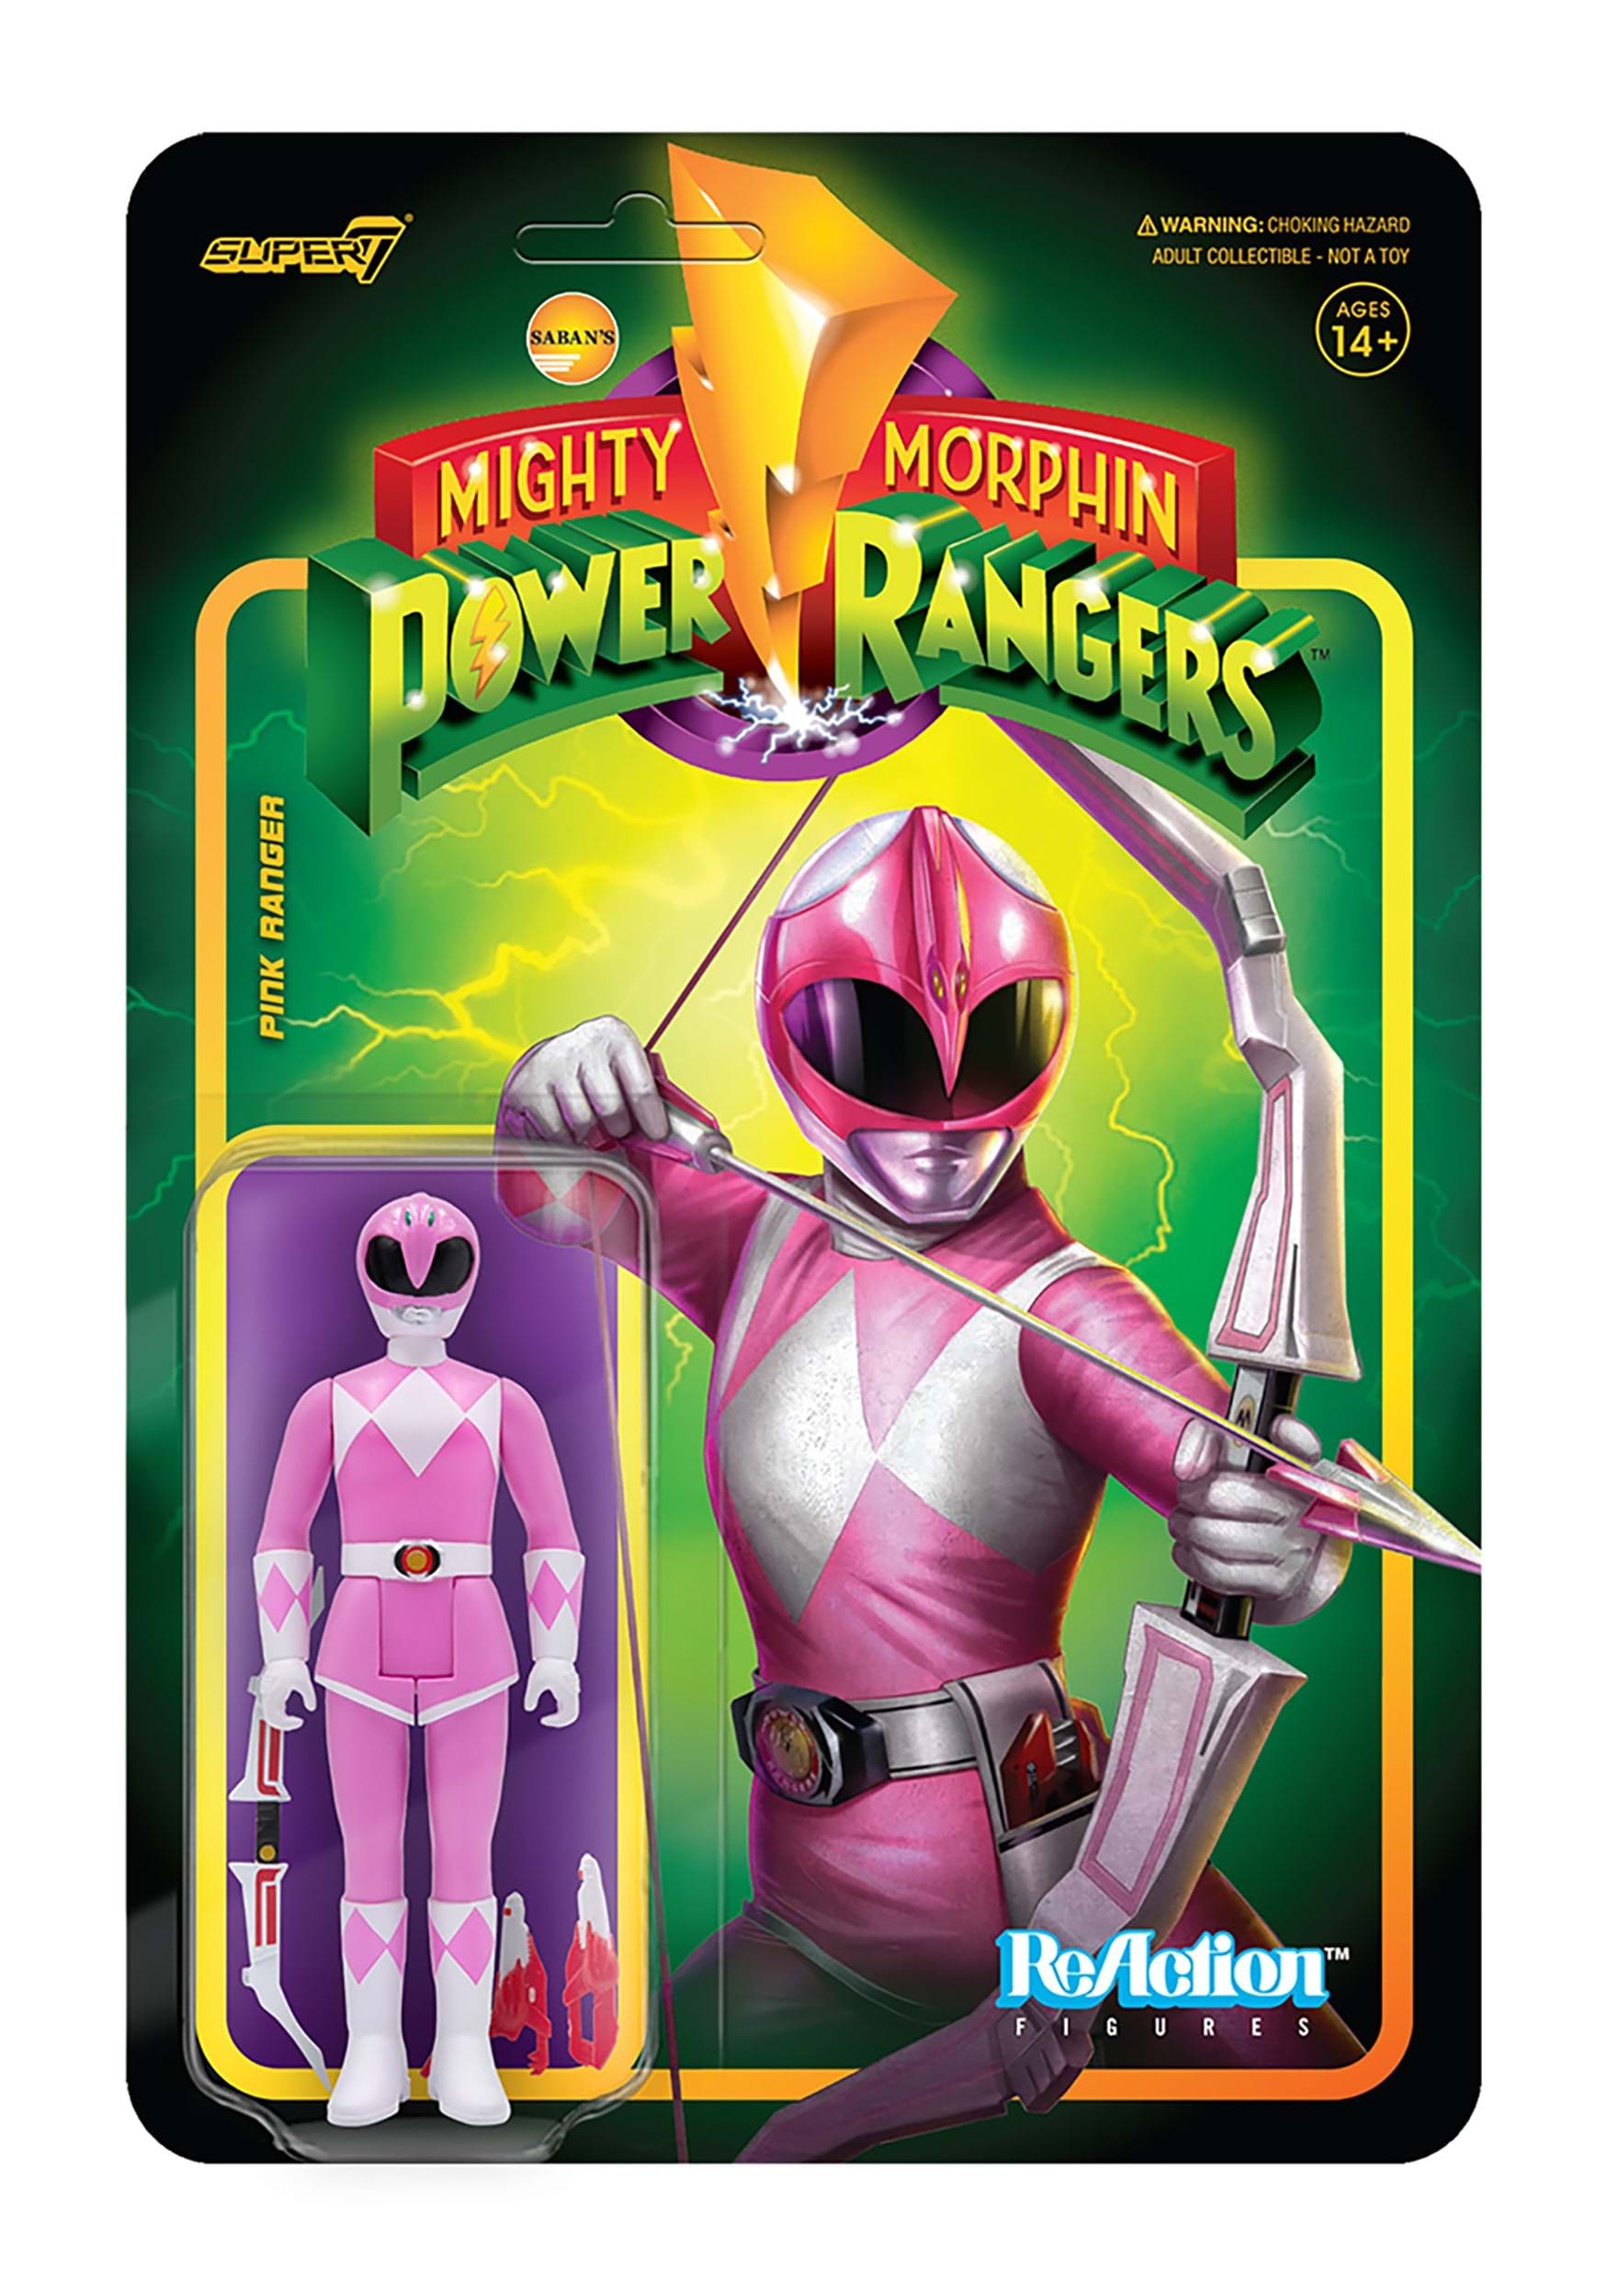 original pink power ranger